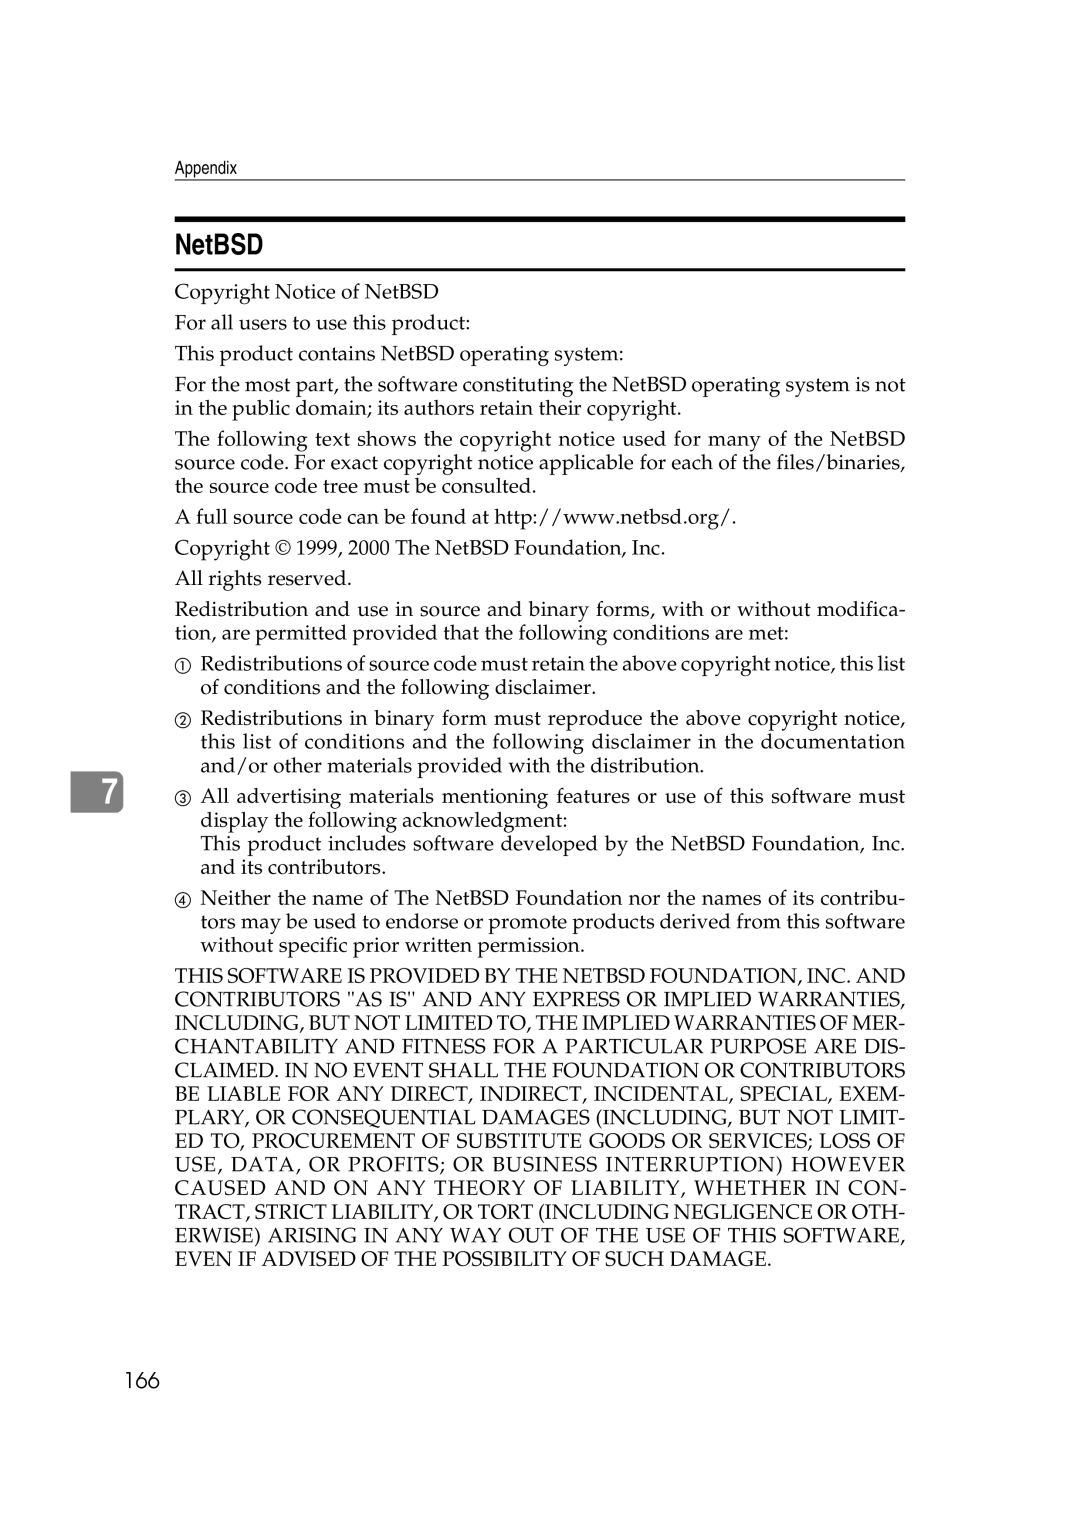 Lanier AP2610 manual NetBSD, 166 